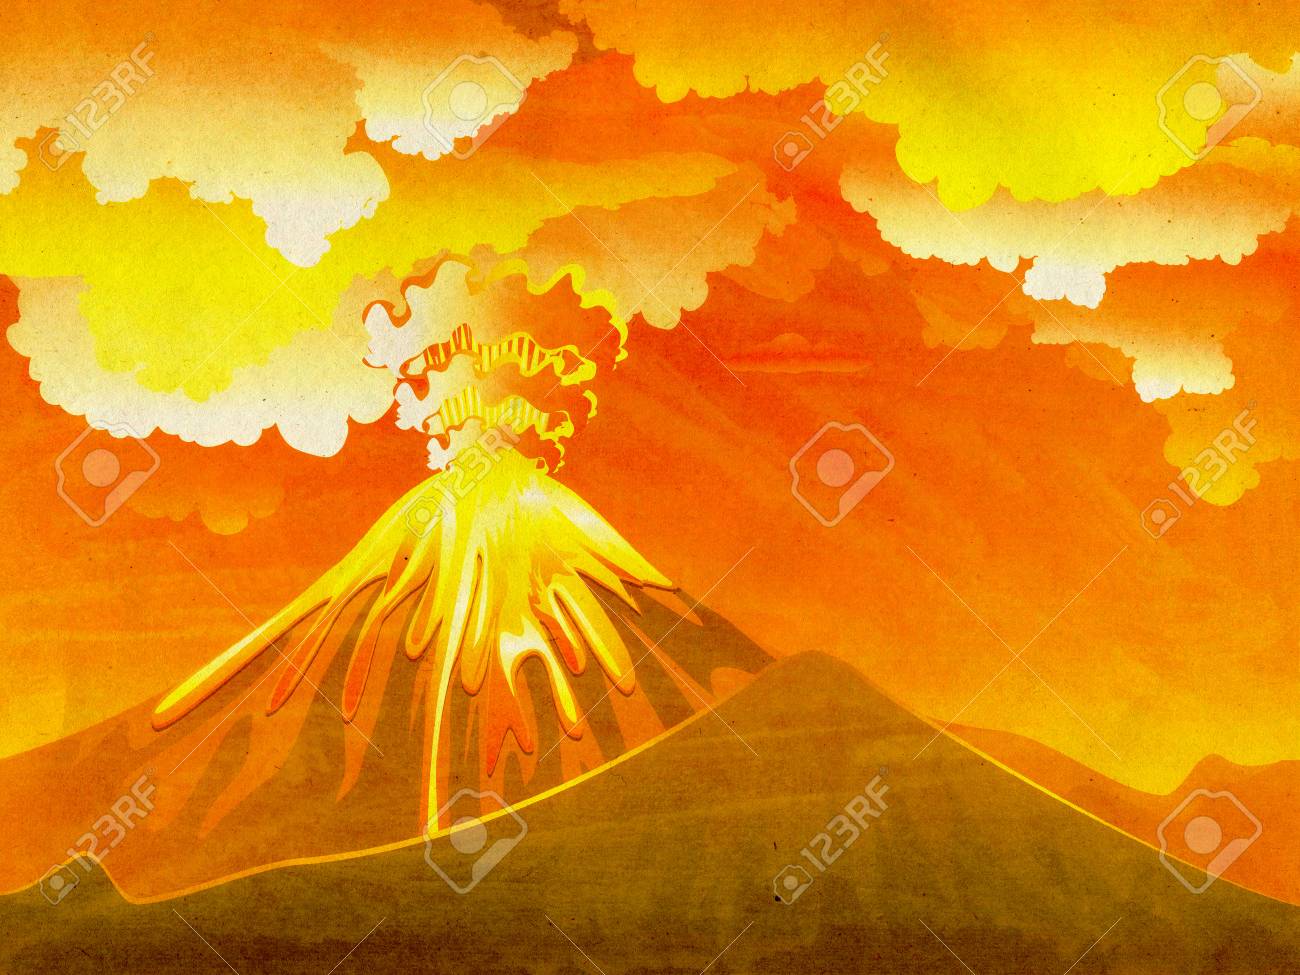 Free download Illustration Of Cartoon Volcano Eruption With Hot Lava Grunge  [1300x975] for your Desktop, Mobile & Tablet | Explore 42+ Eruption  Background | Volcanic Eruption Wallpaper,